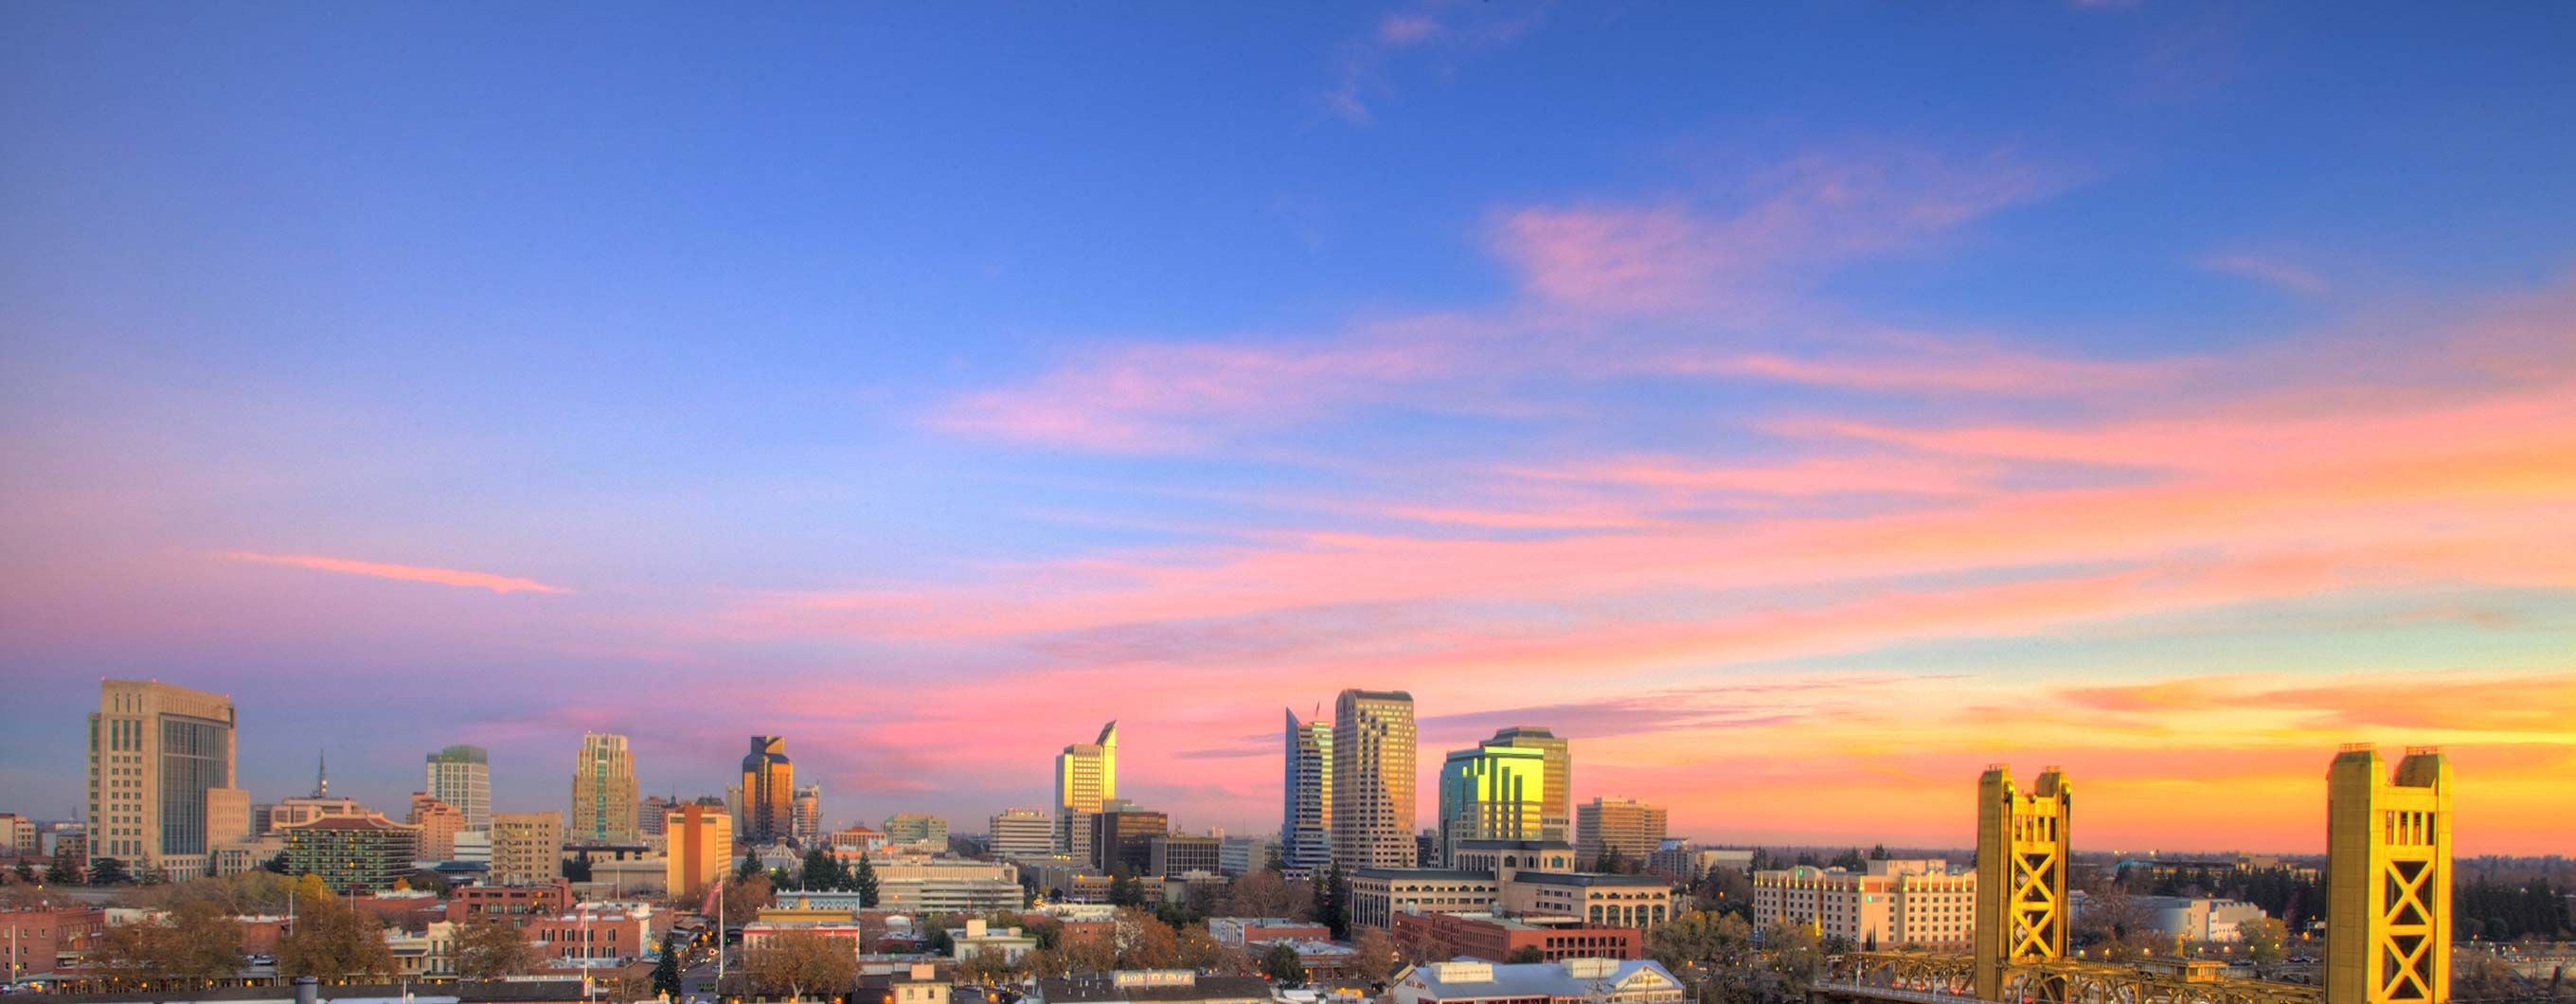 Image of the Sacramento city skyline with a blue and pink sky